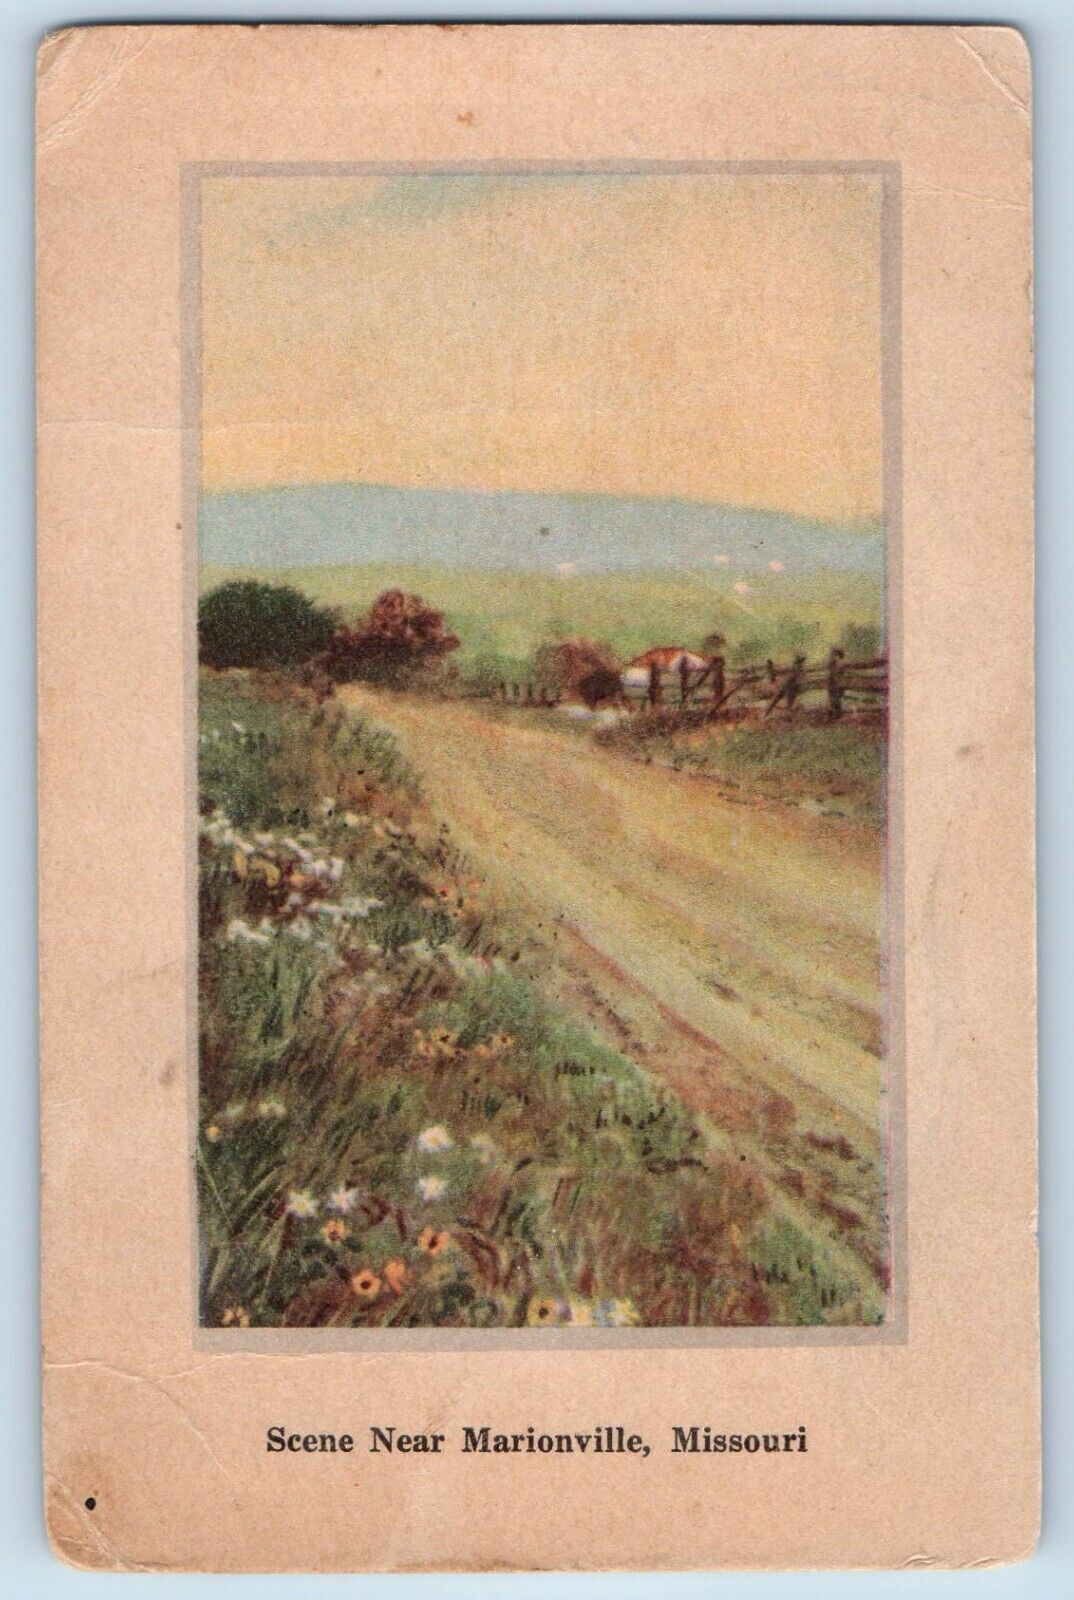 Marionville Missouri Postcard Scene Near Road Field 1910 Vintage Antique Posted